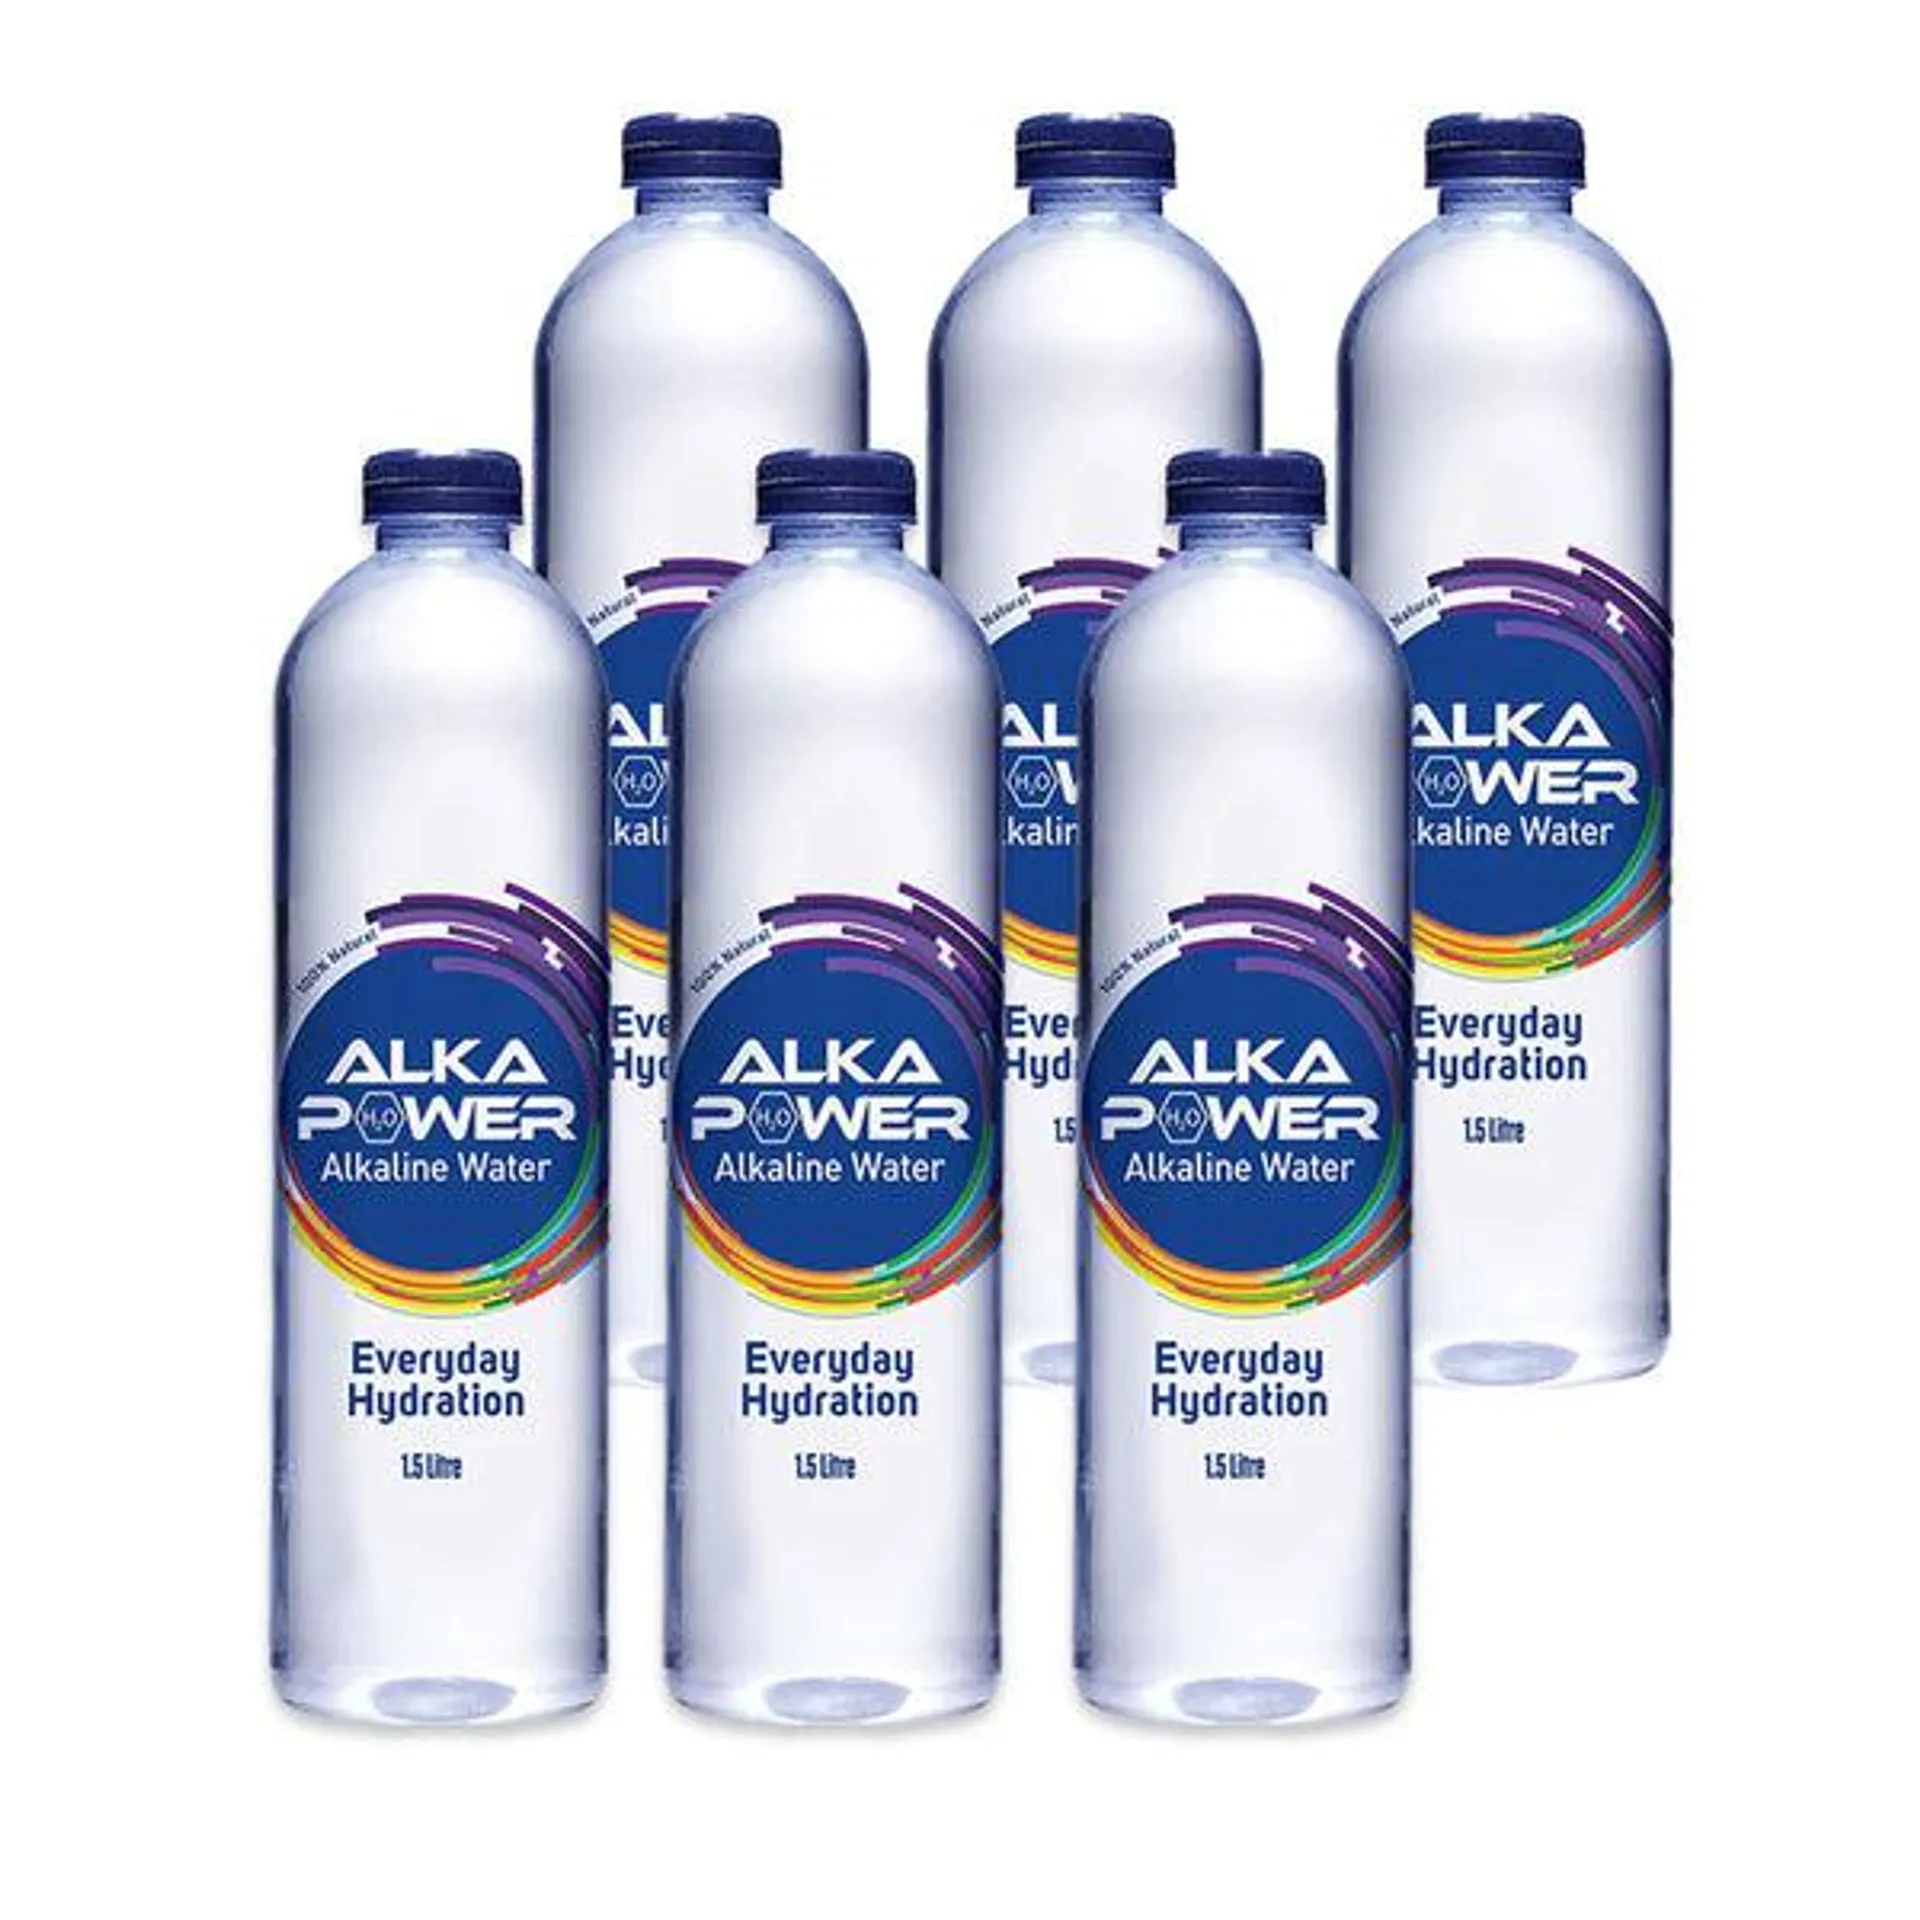 Alka Power Alkaline Water 6 x 1.5L